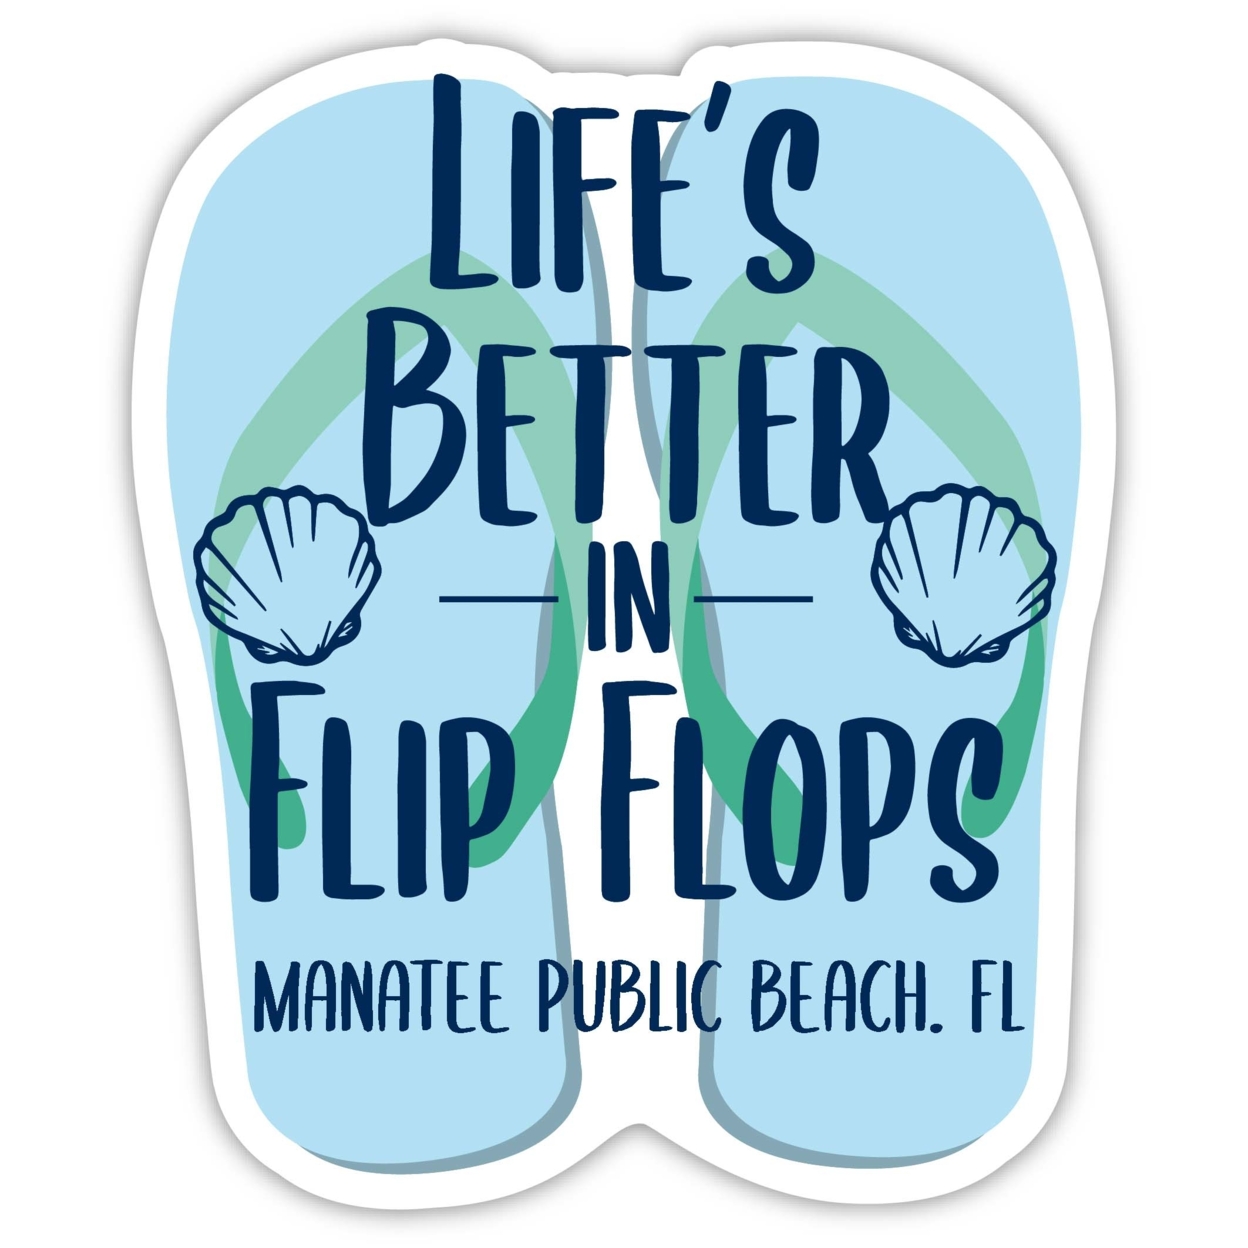 Manatee Public Beach Florida Souvenir 4 Inch Vinyl Decal Sticker Flip Flop Design